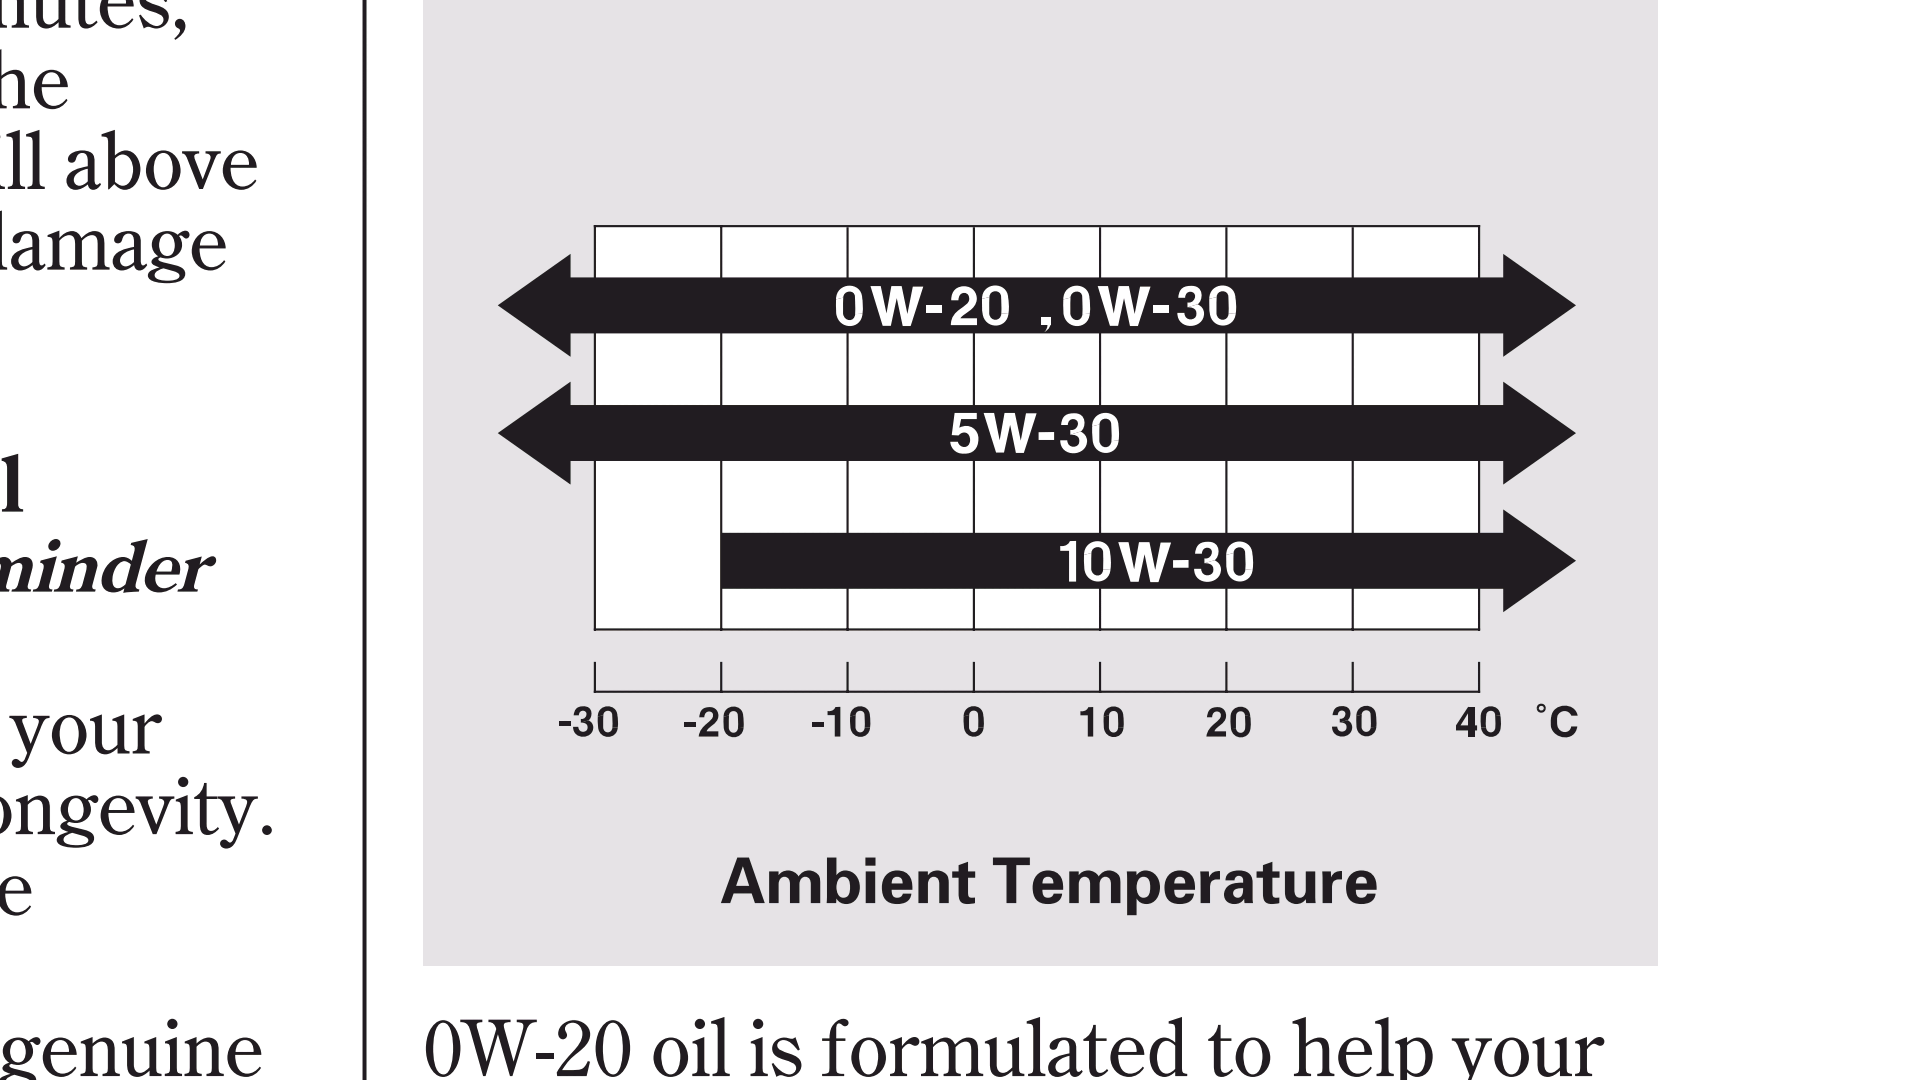 Motor Oil Temperature Range Chart